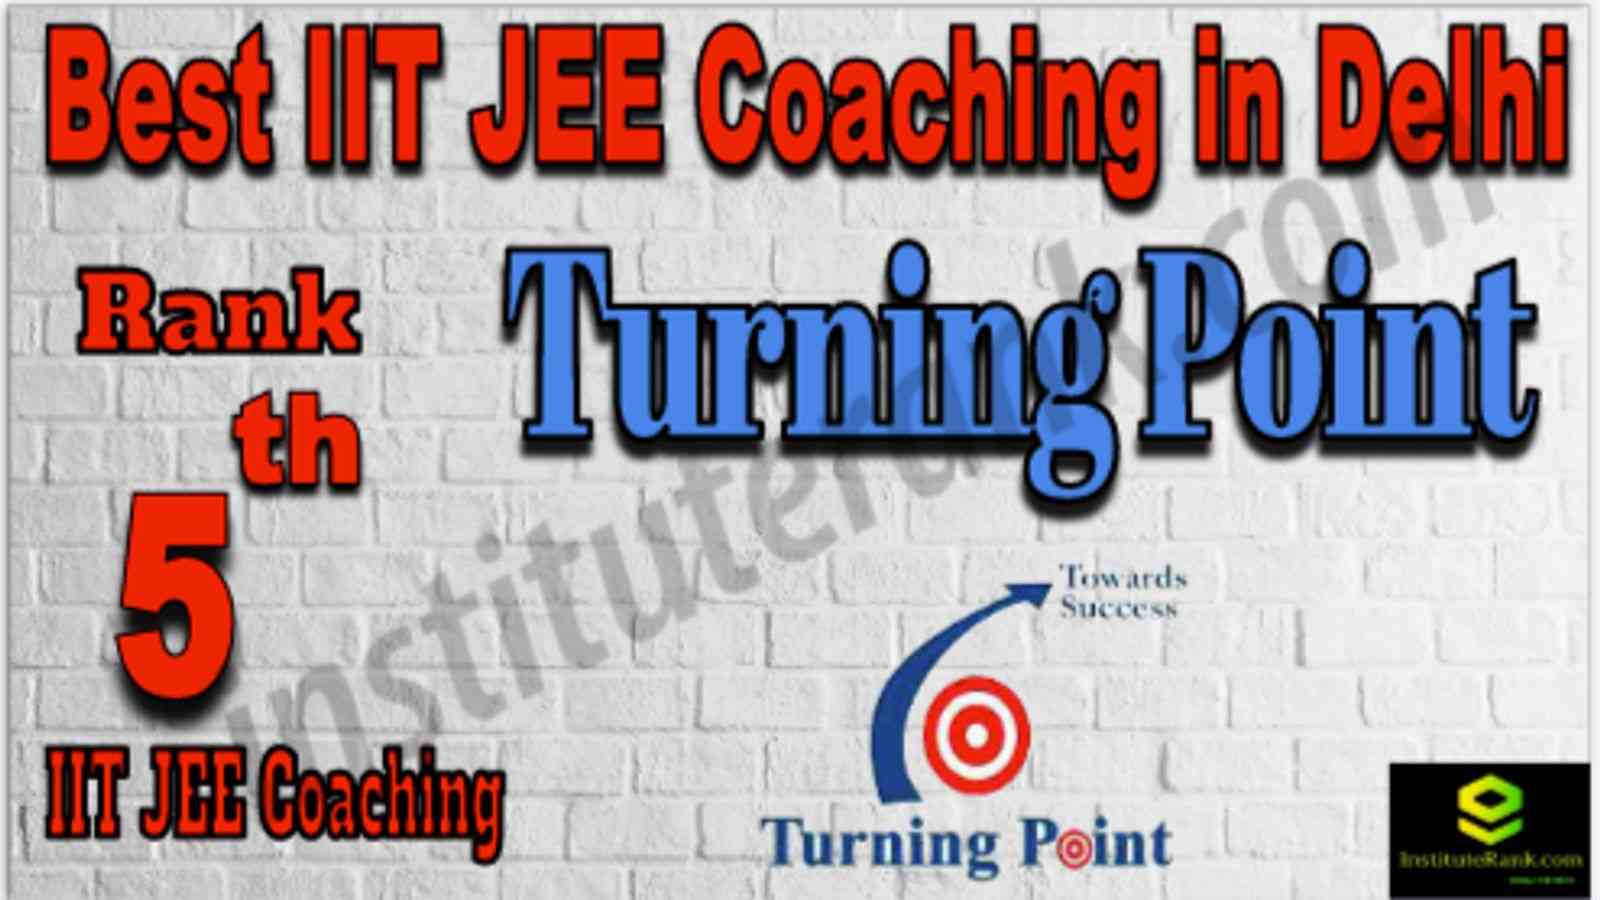 Rank 5 Best IIT JEE Coaching in Delhi